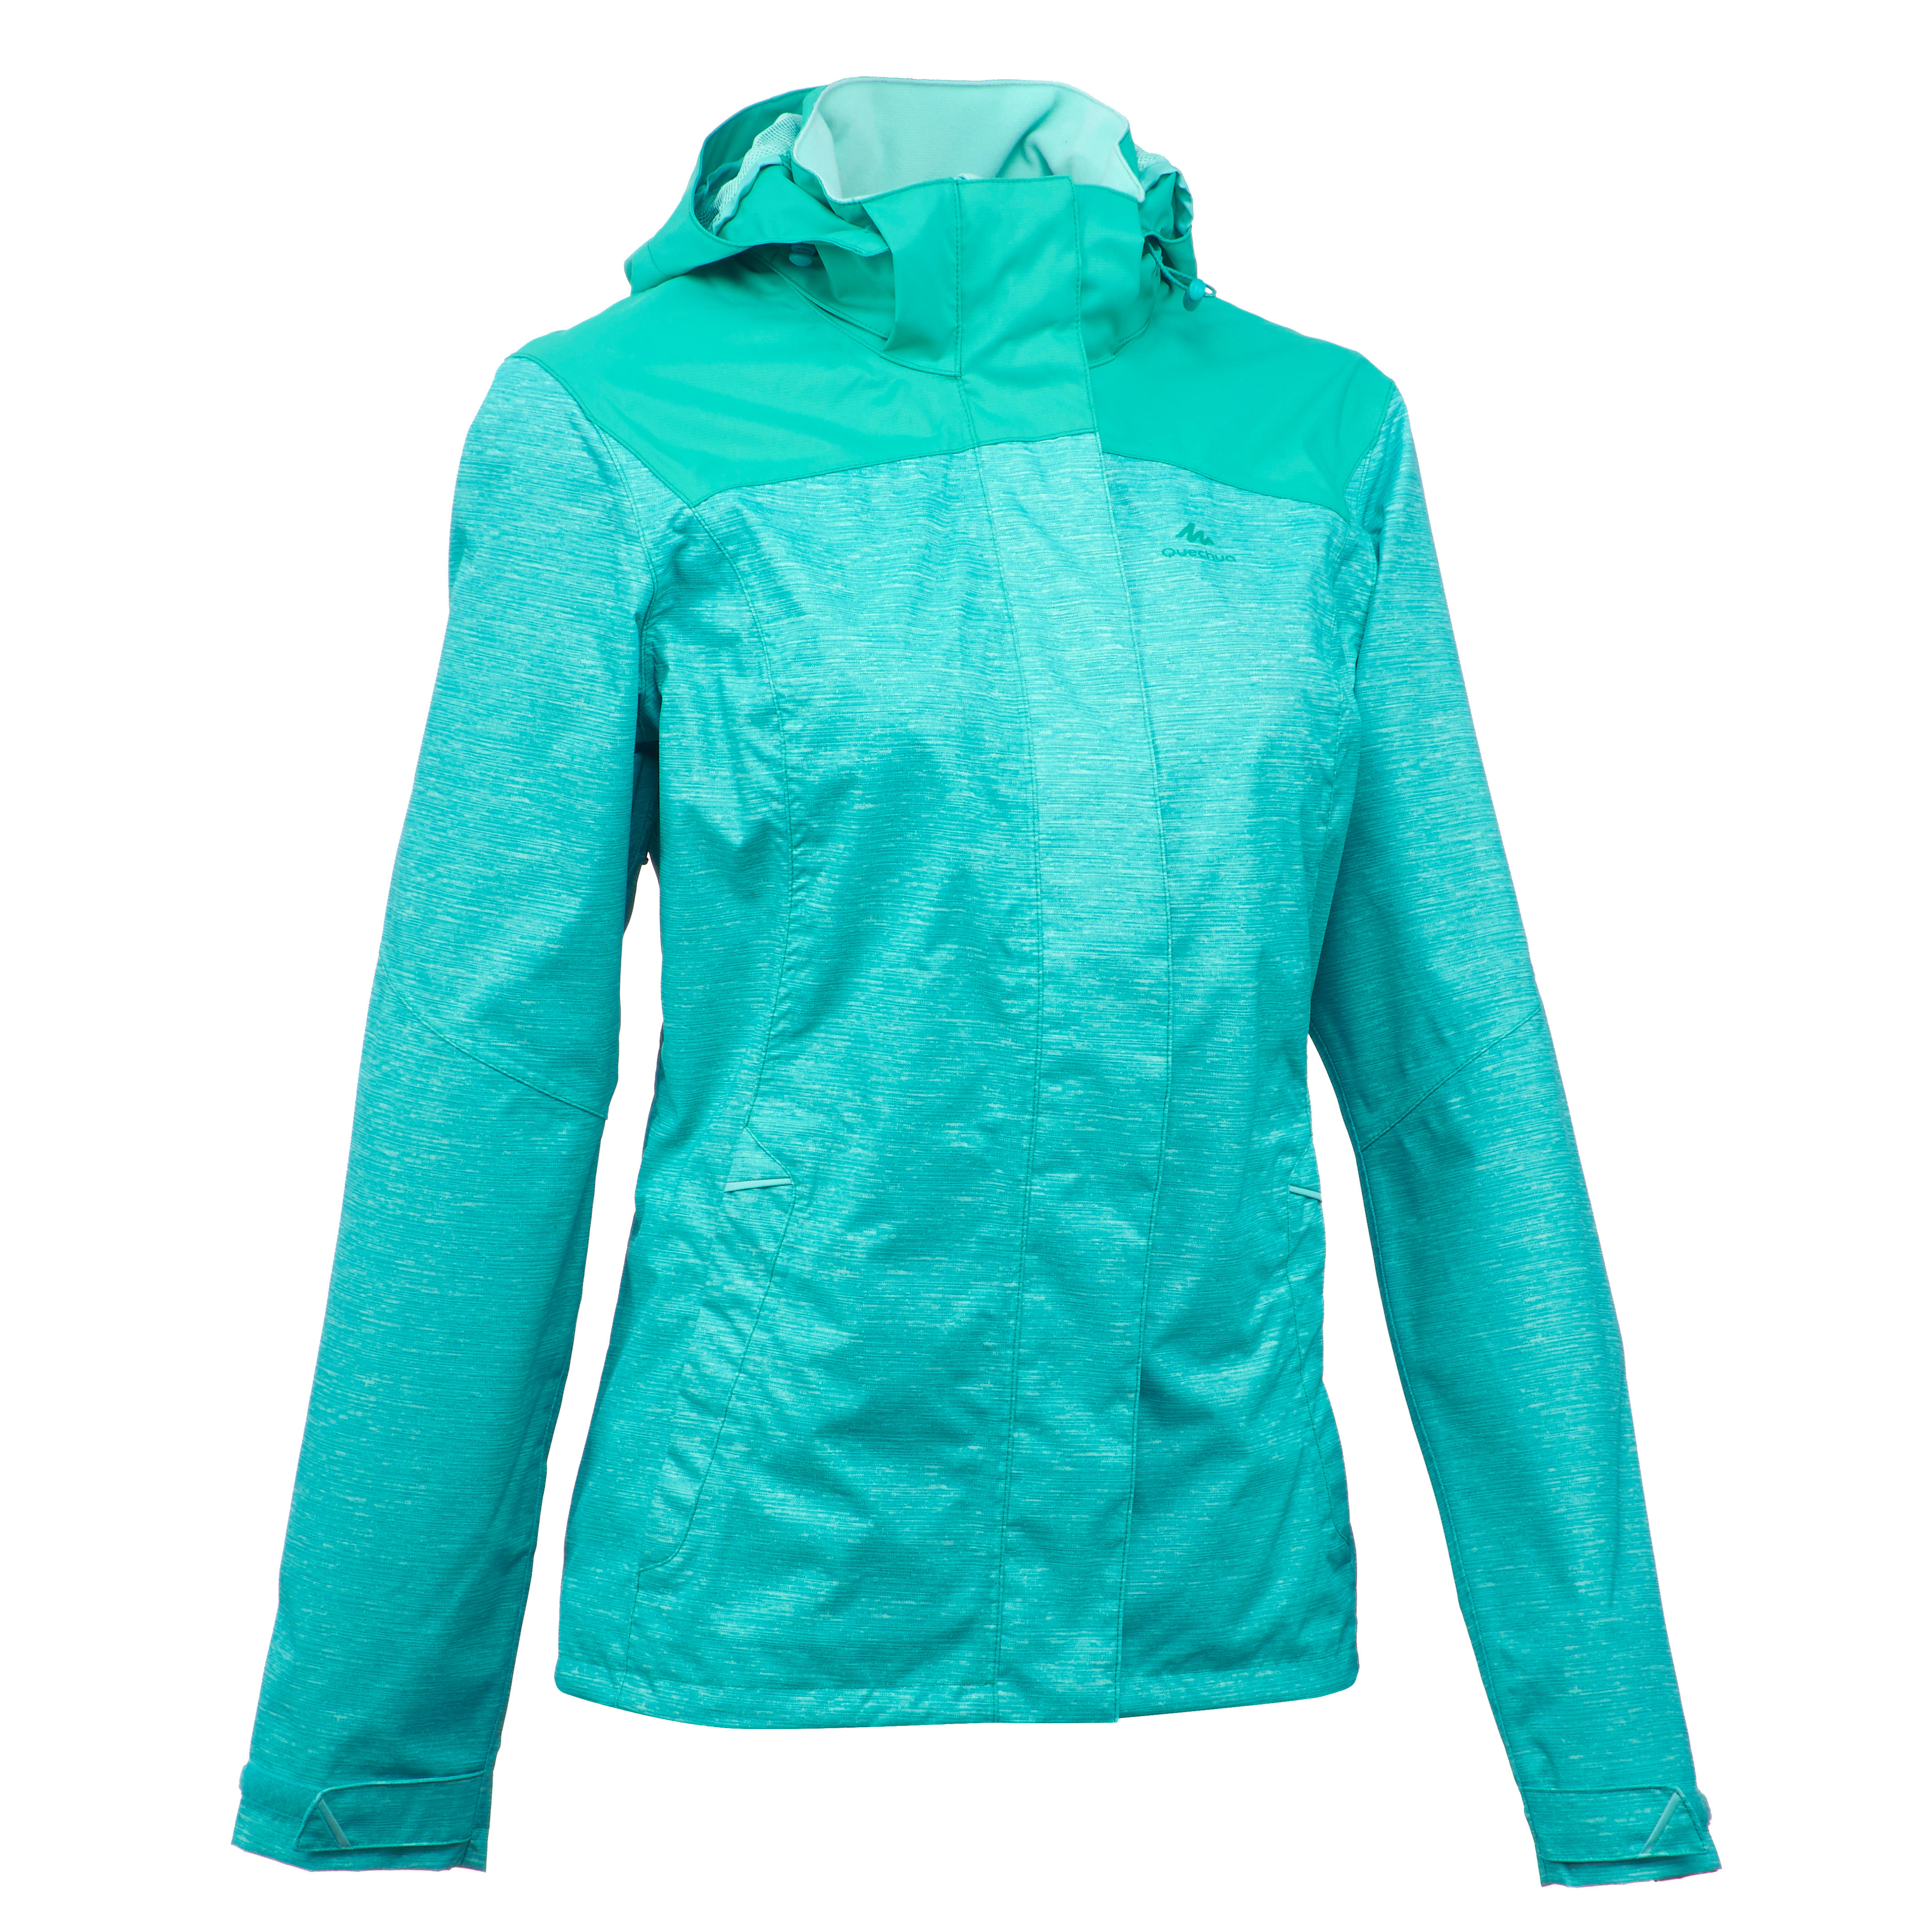 decathlon women's hiking jacket